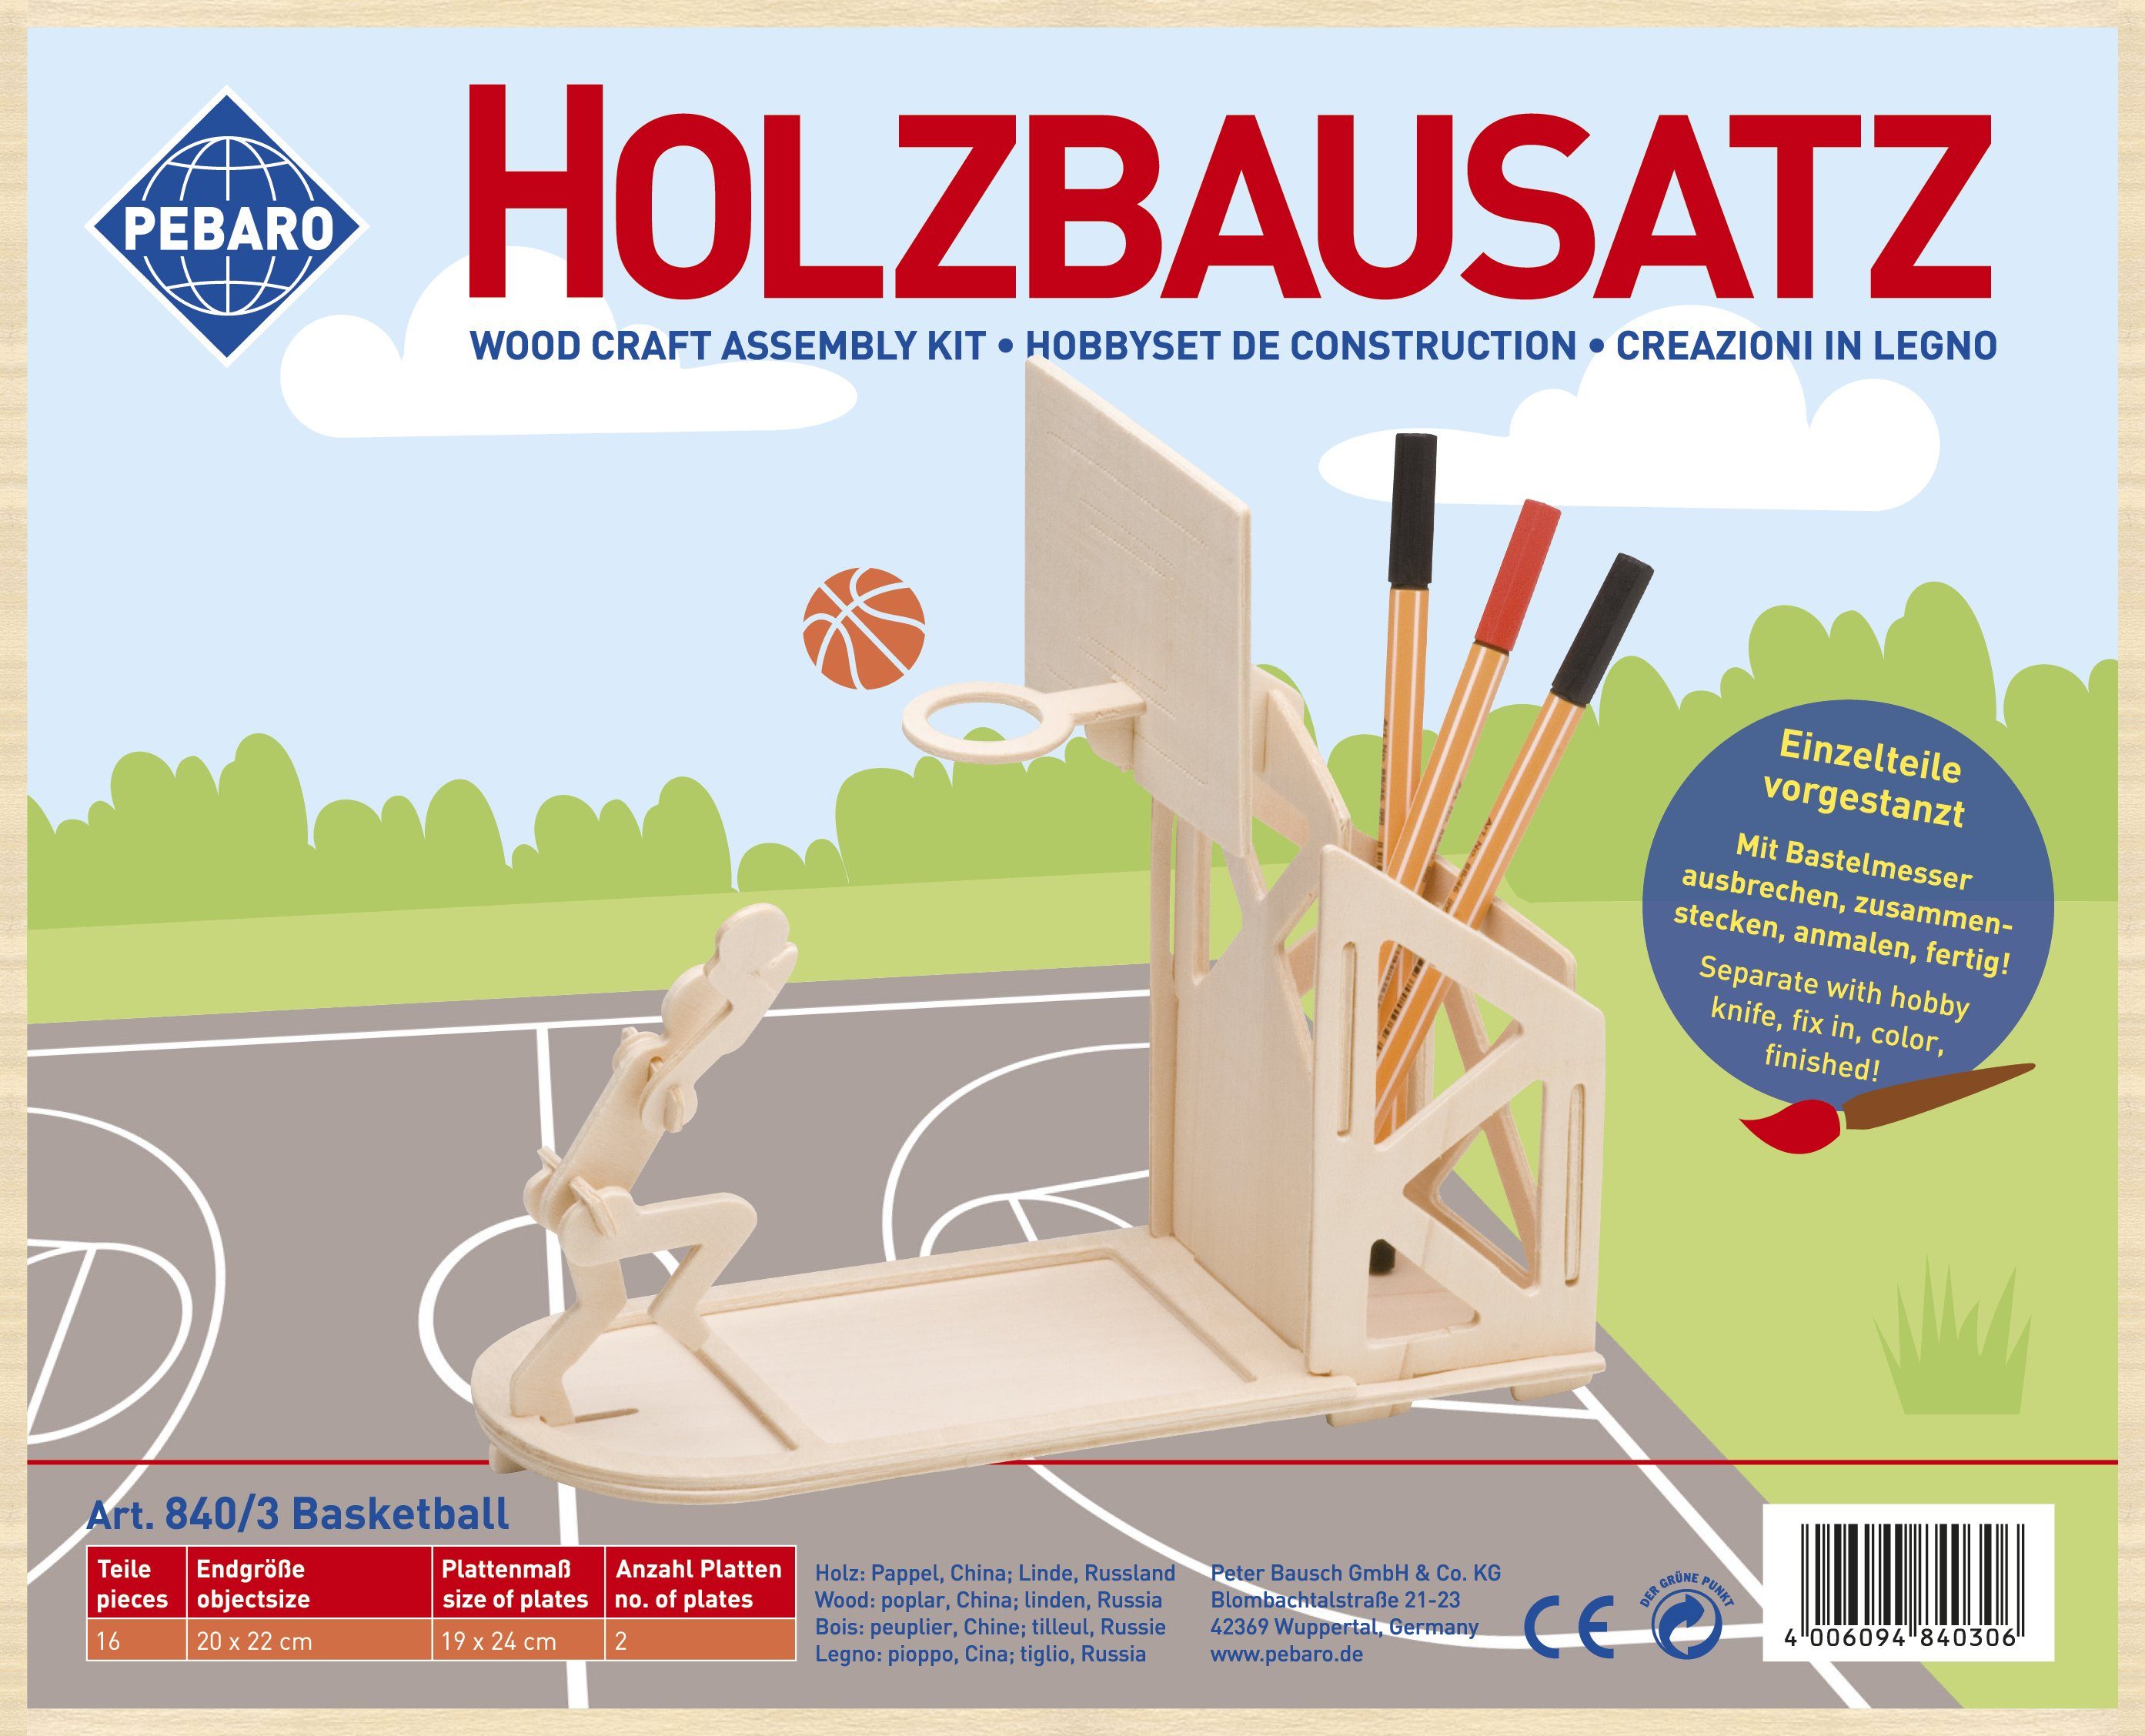 Pebaro 3D-Puzzle Holzbausatz Stiftehalter 16 840/3, Basketball, Puzzleteile